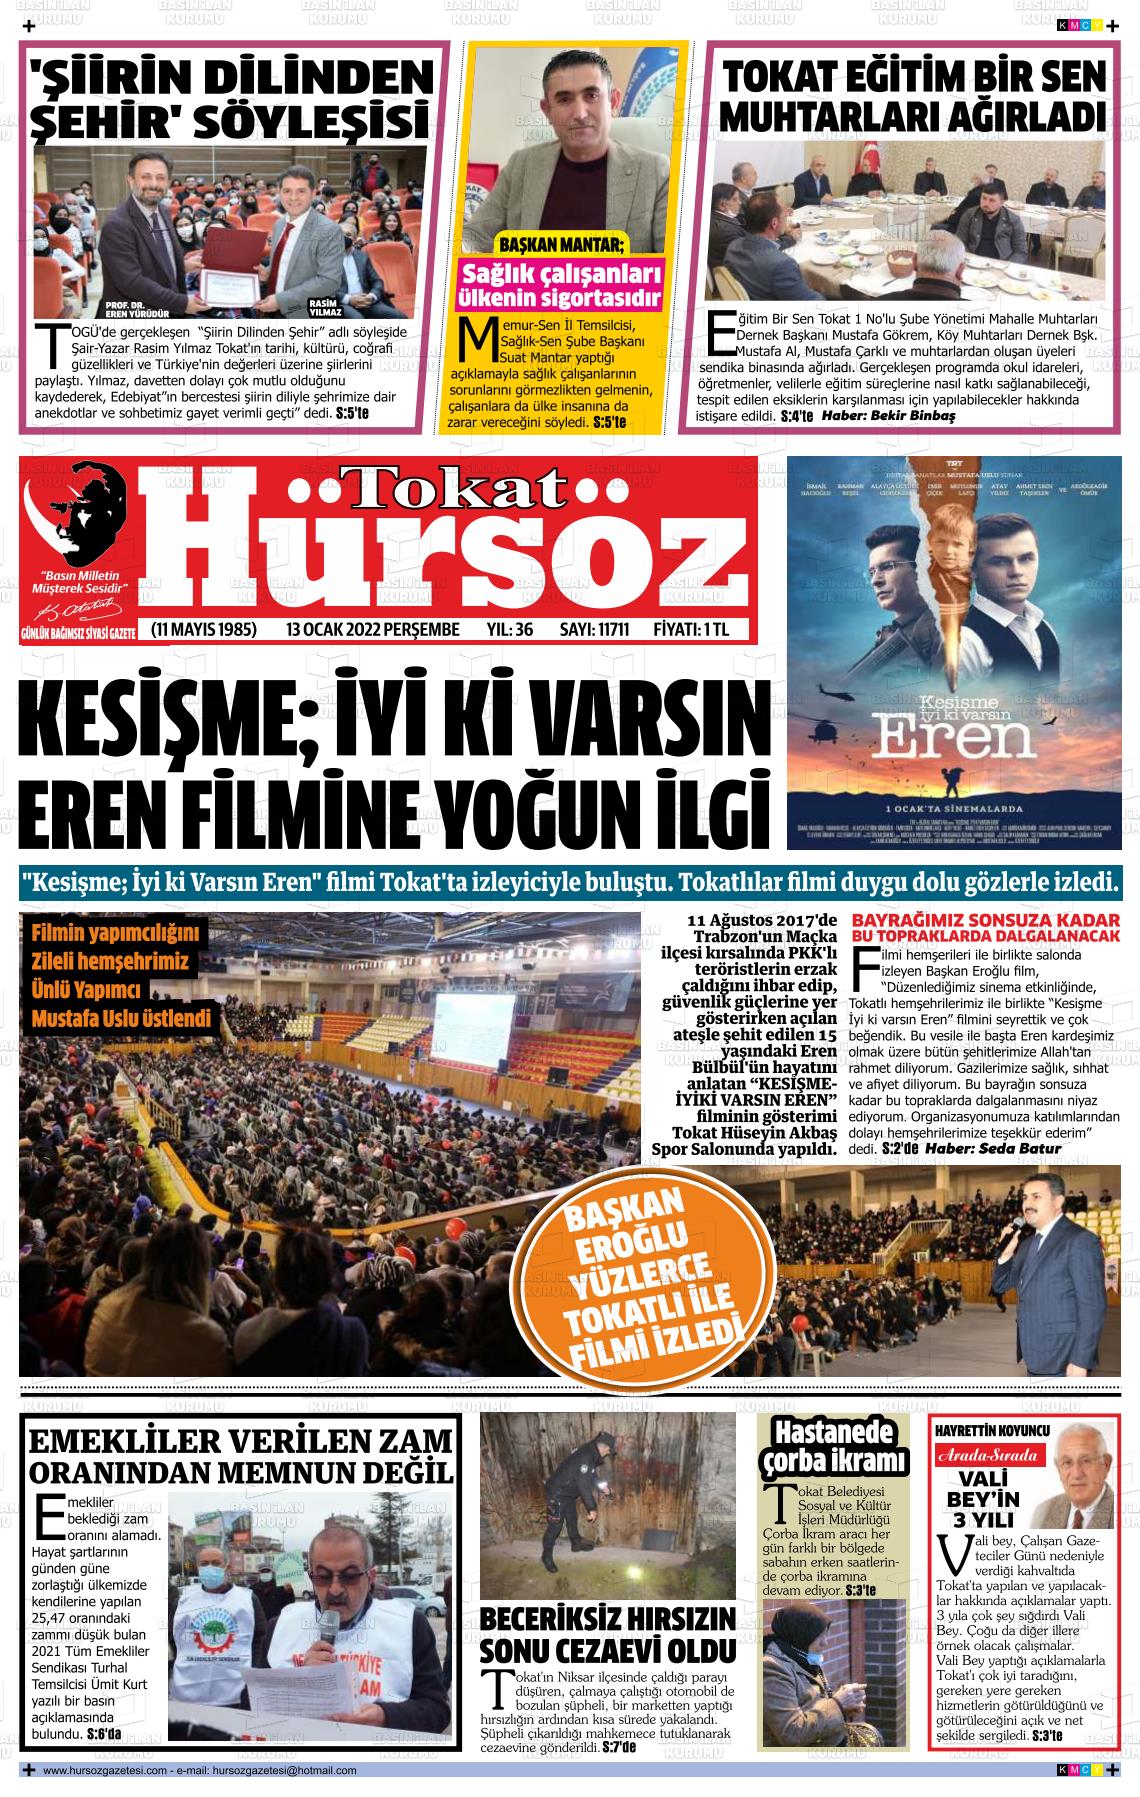 13 Ocak 2022 Hürsöz Gazete Manşeti